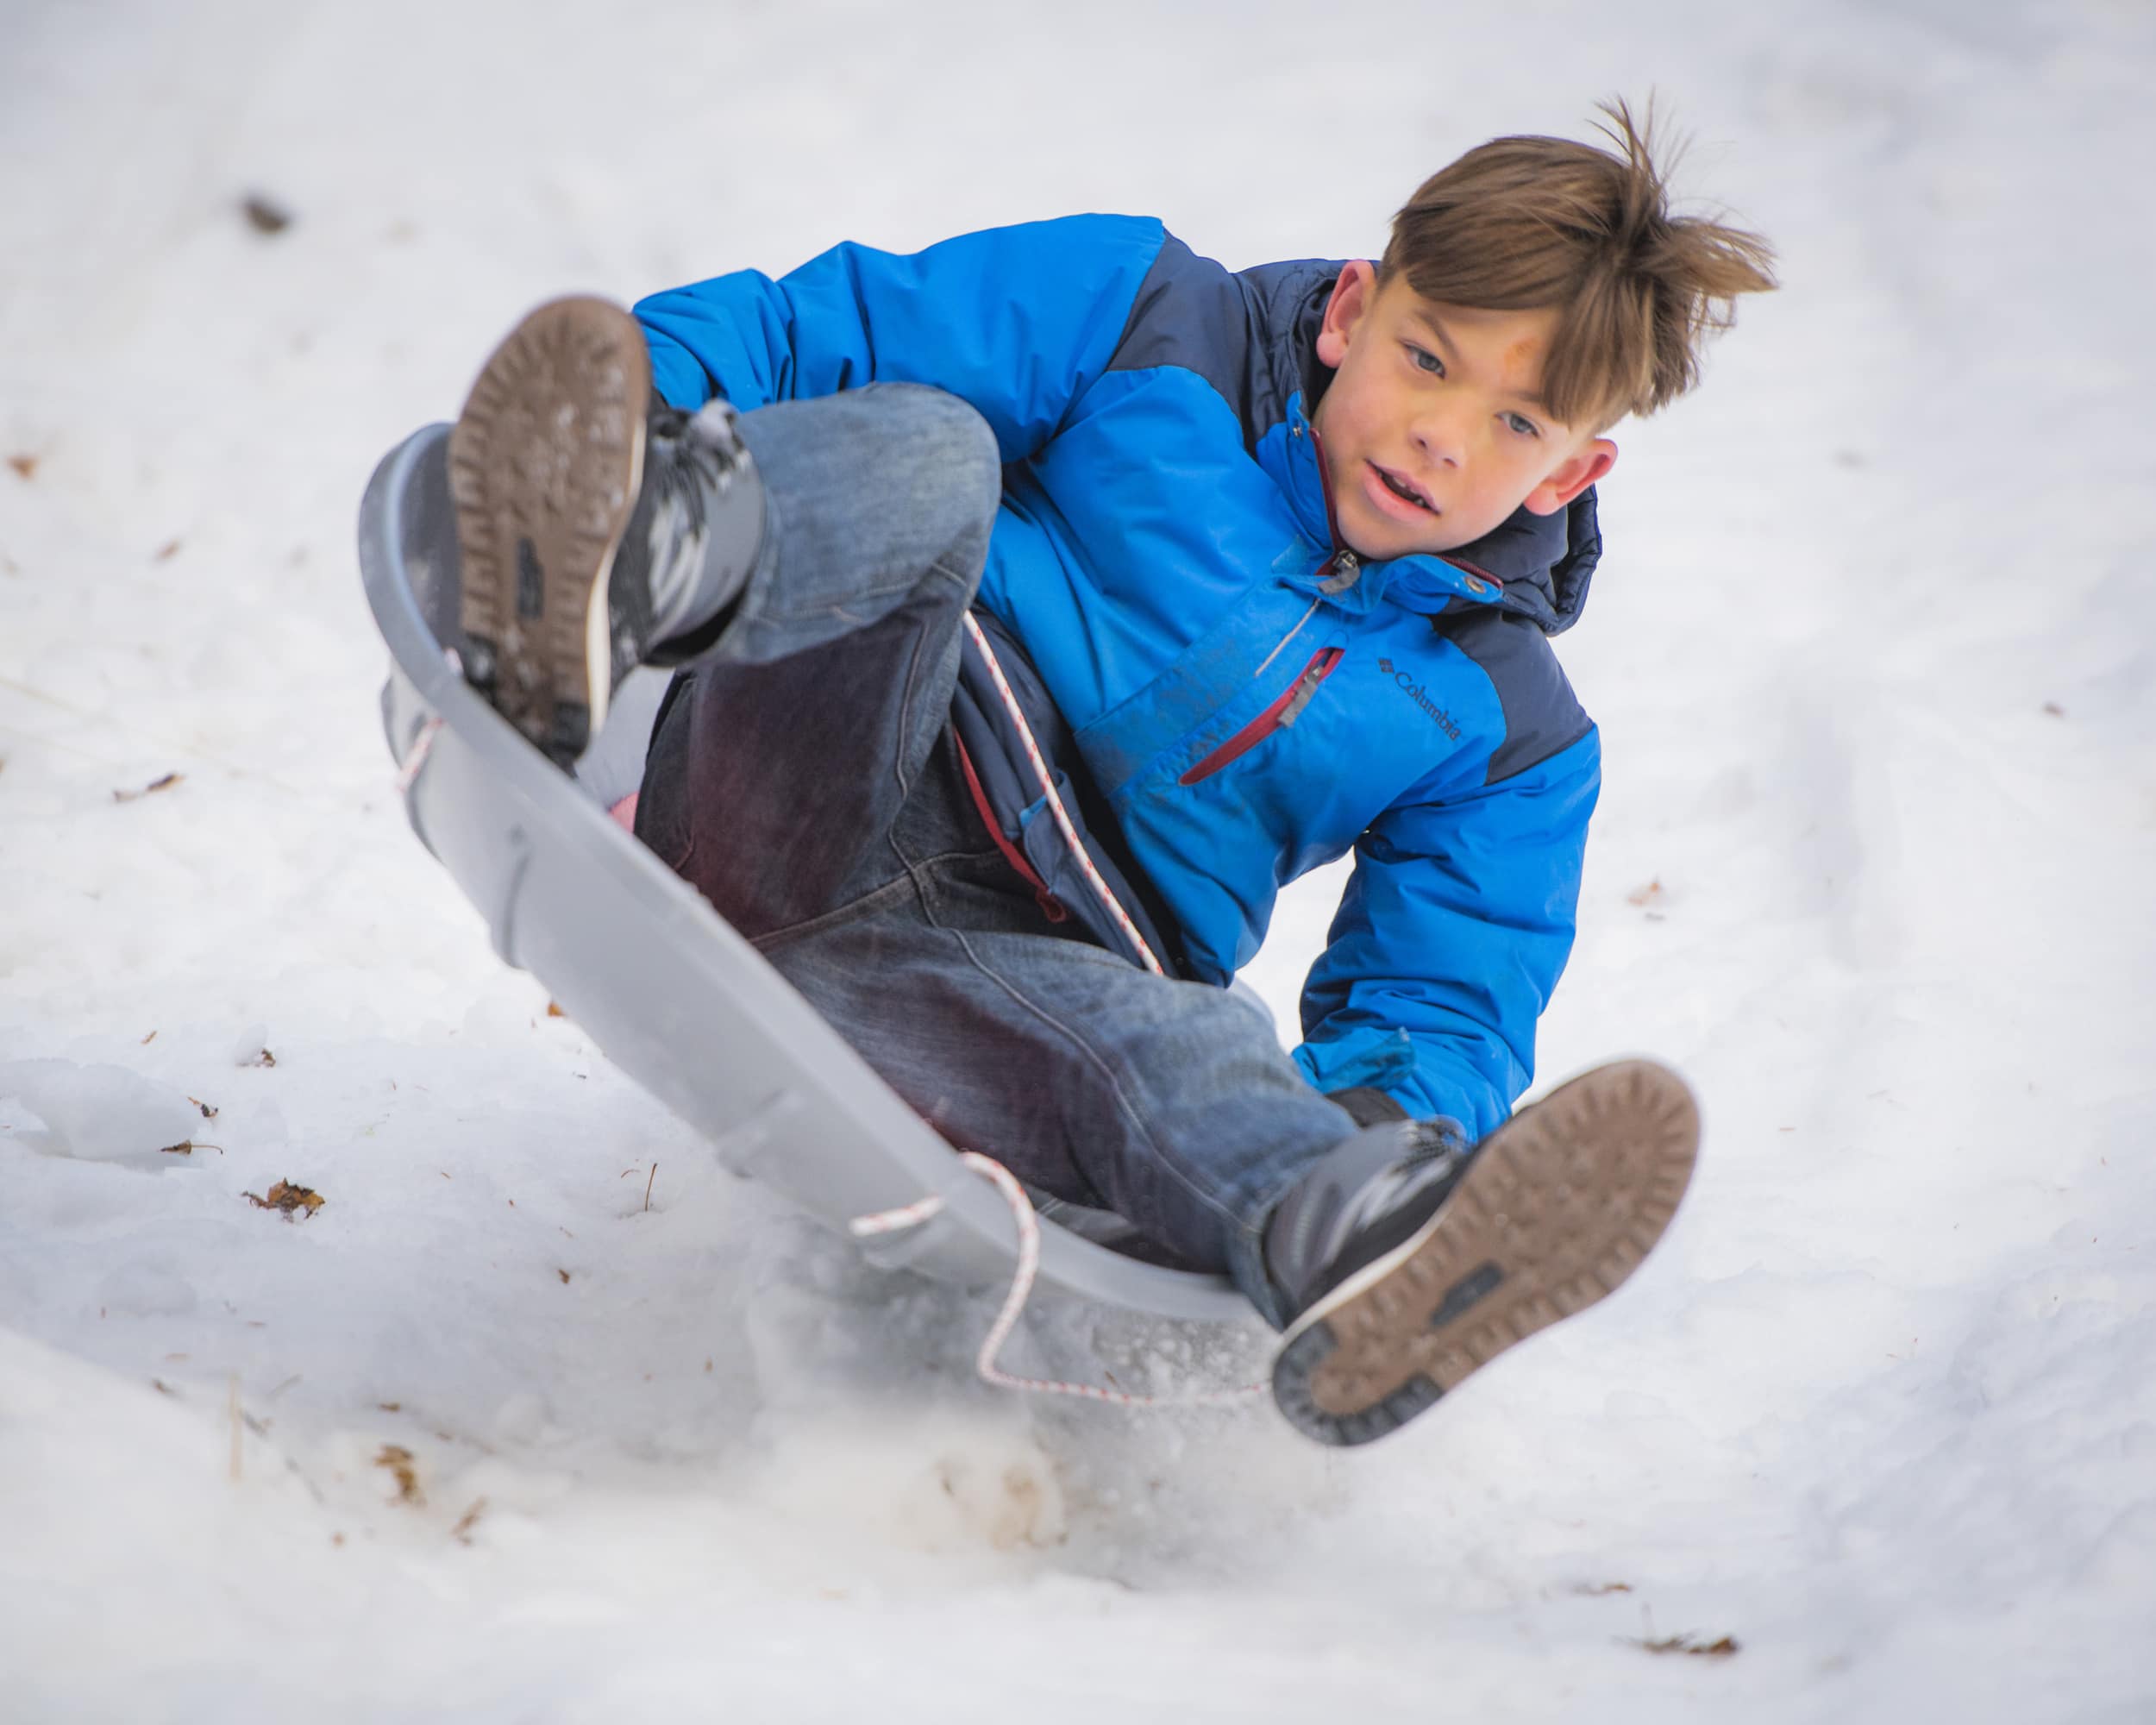 Kid crashing on snow sled